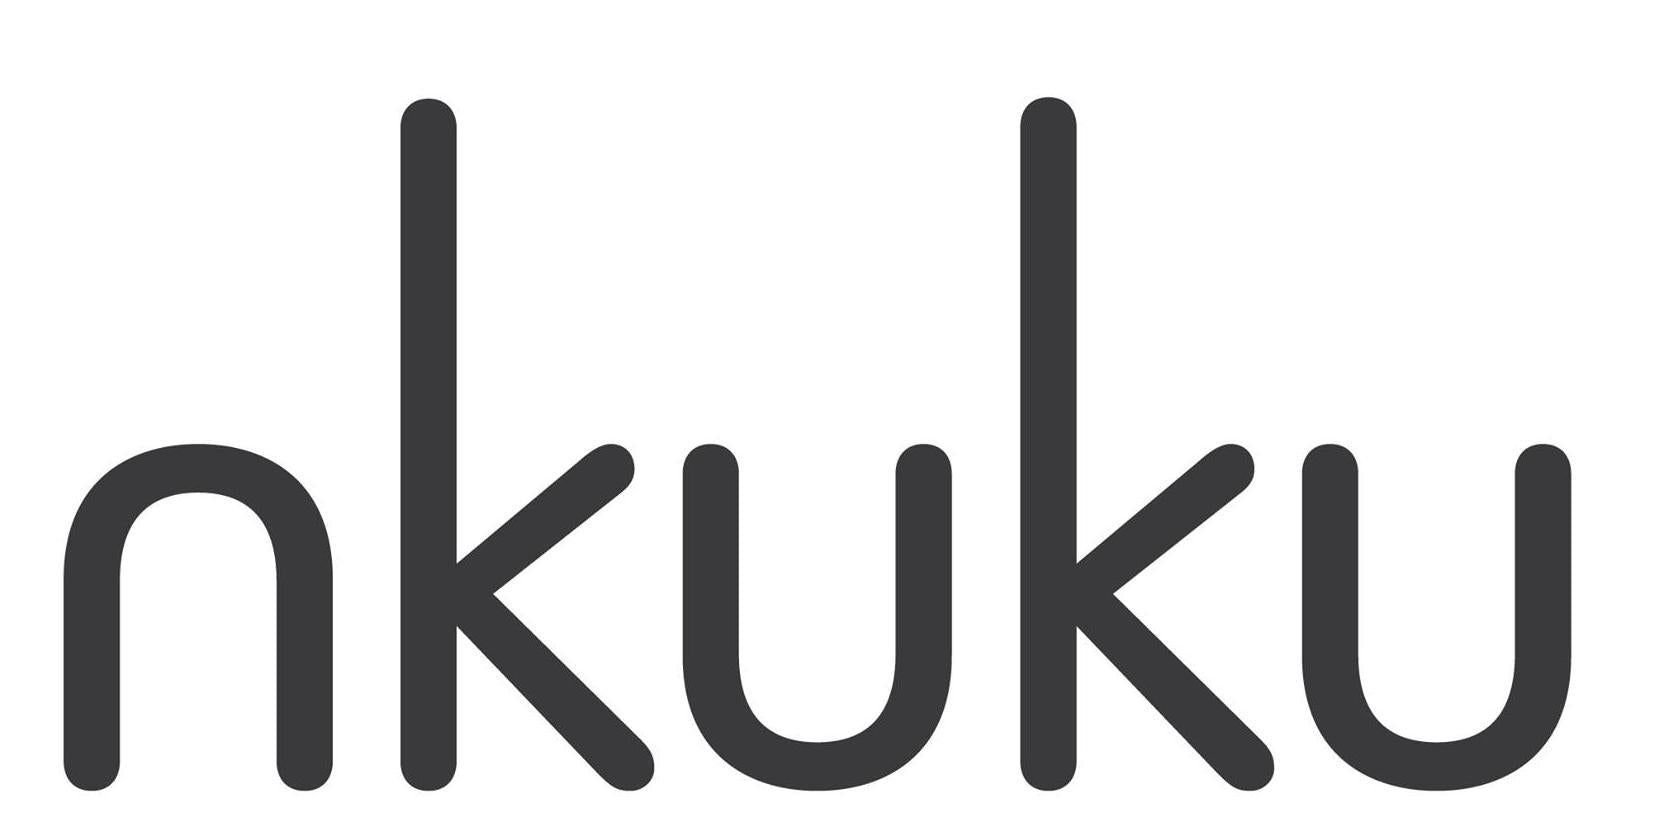 nkuku brand logo in black on white background, minimalist design, modern typography